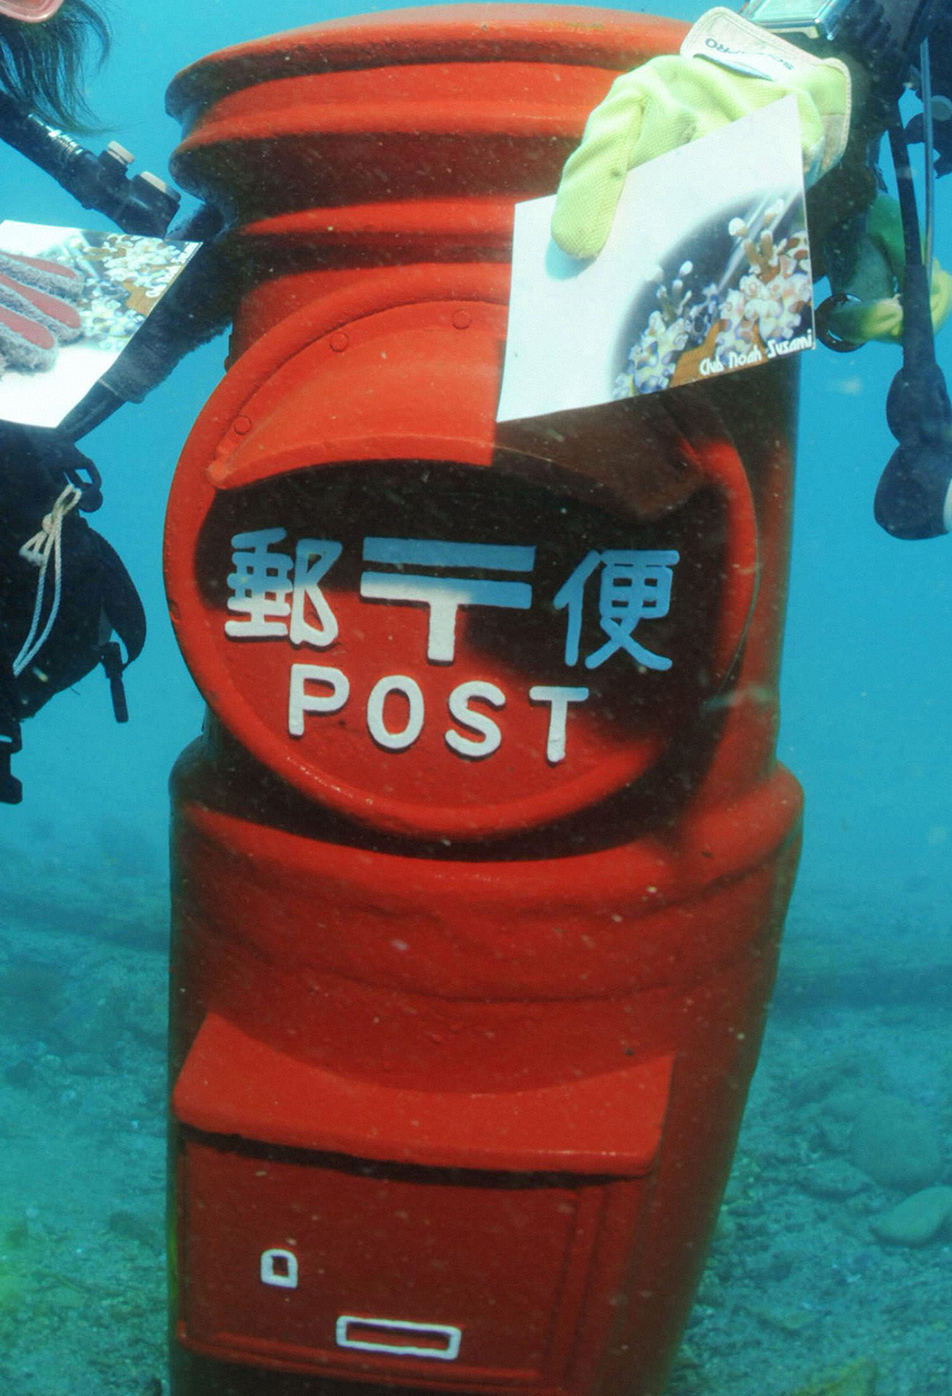 Underwater post office box in Susami, Japan